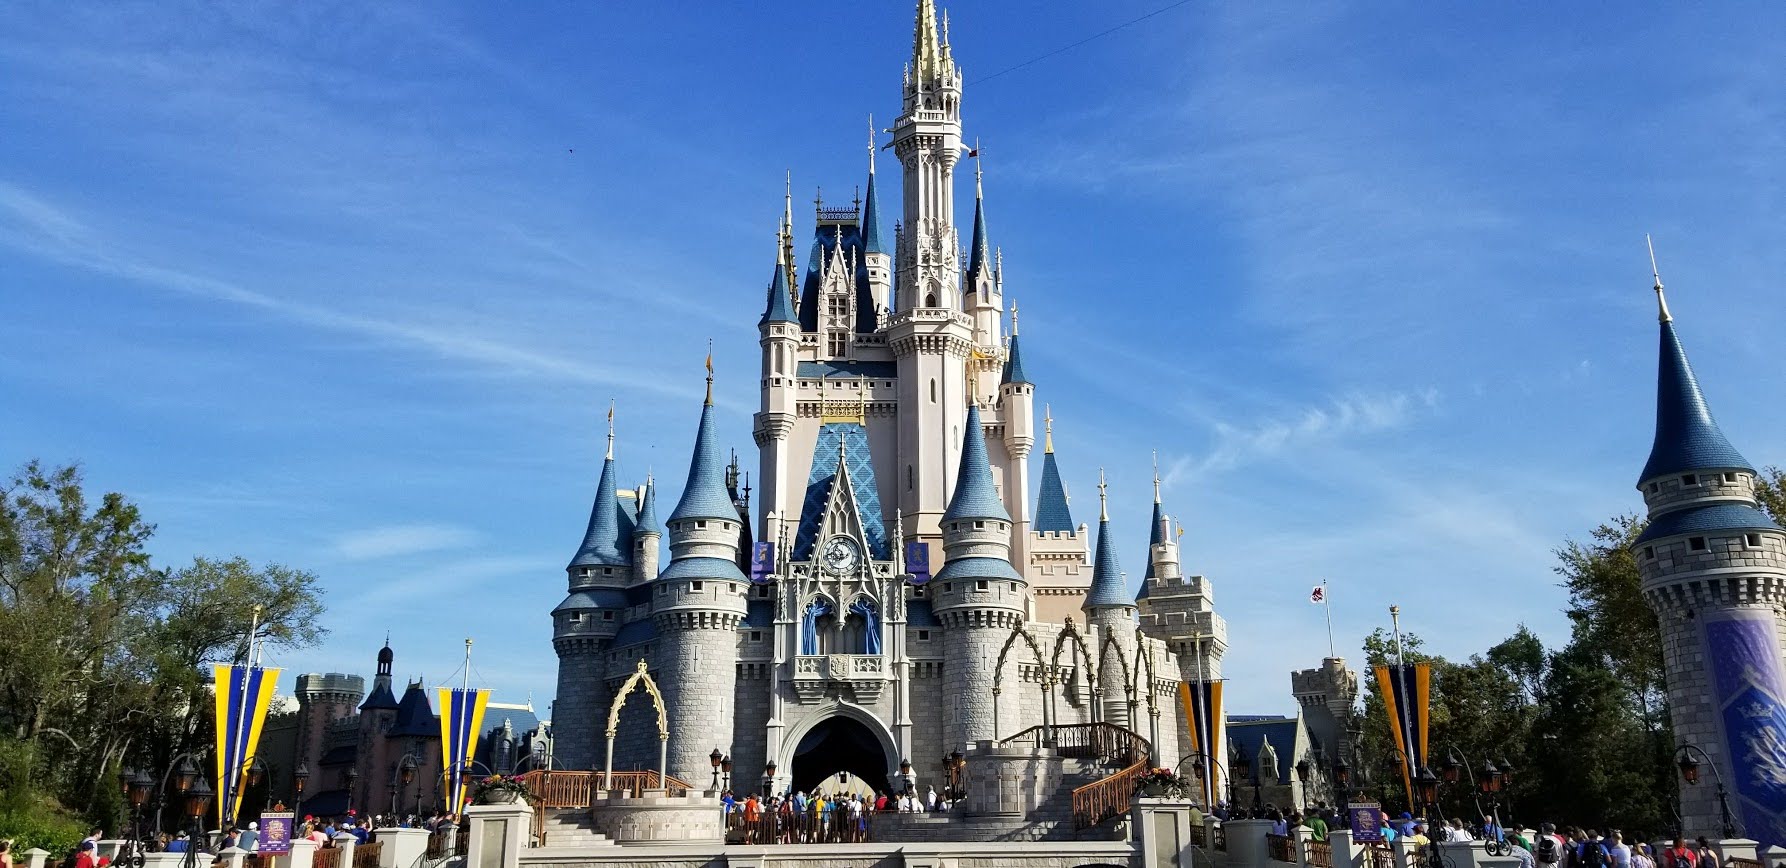 Park hours for Disney World released through December 5th